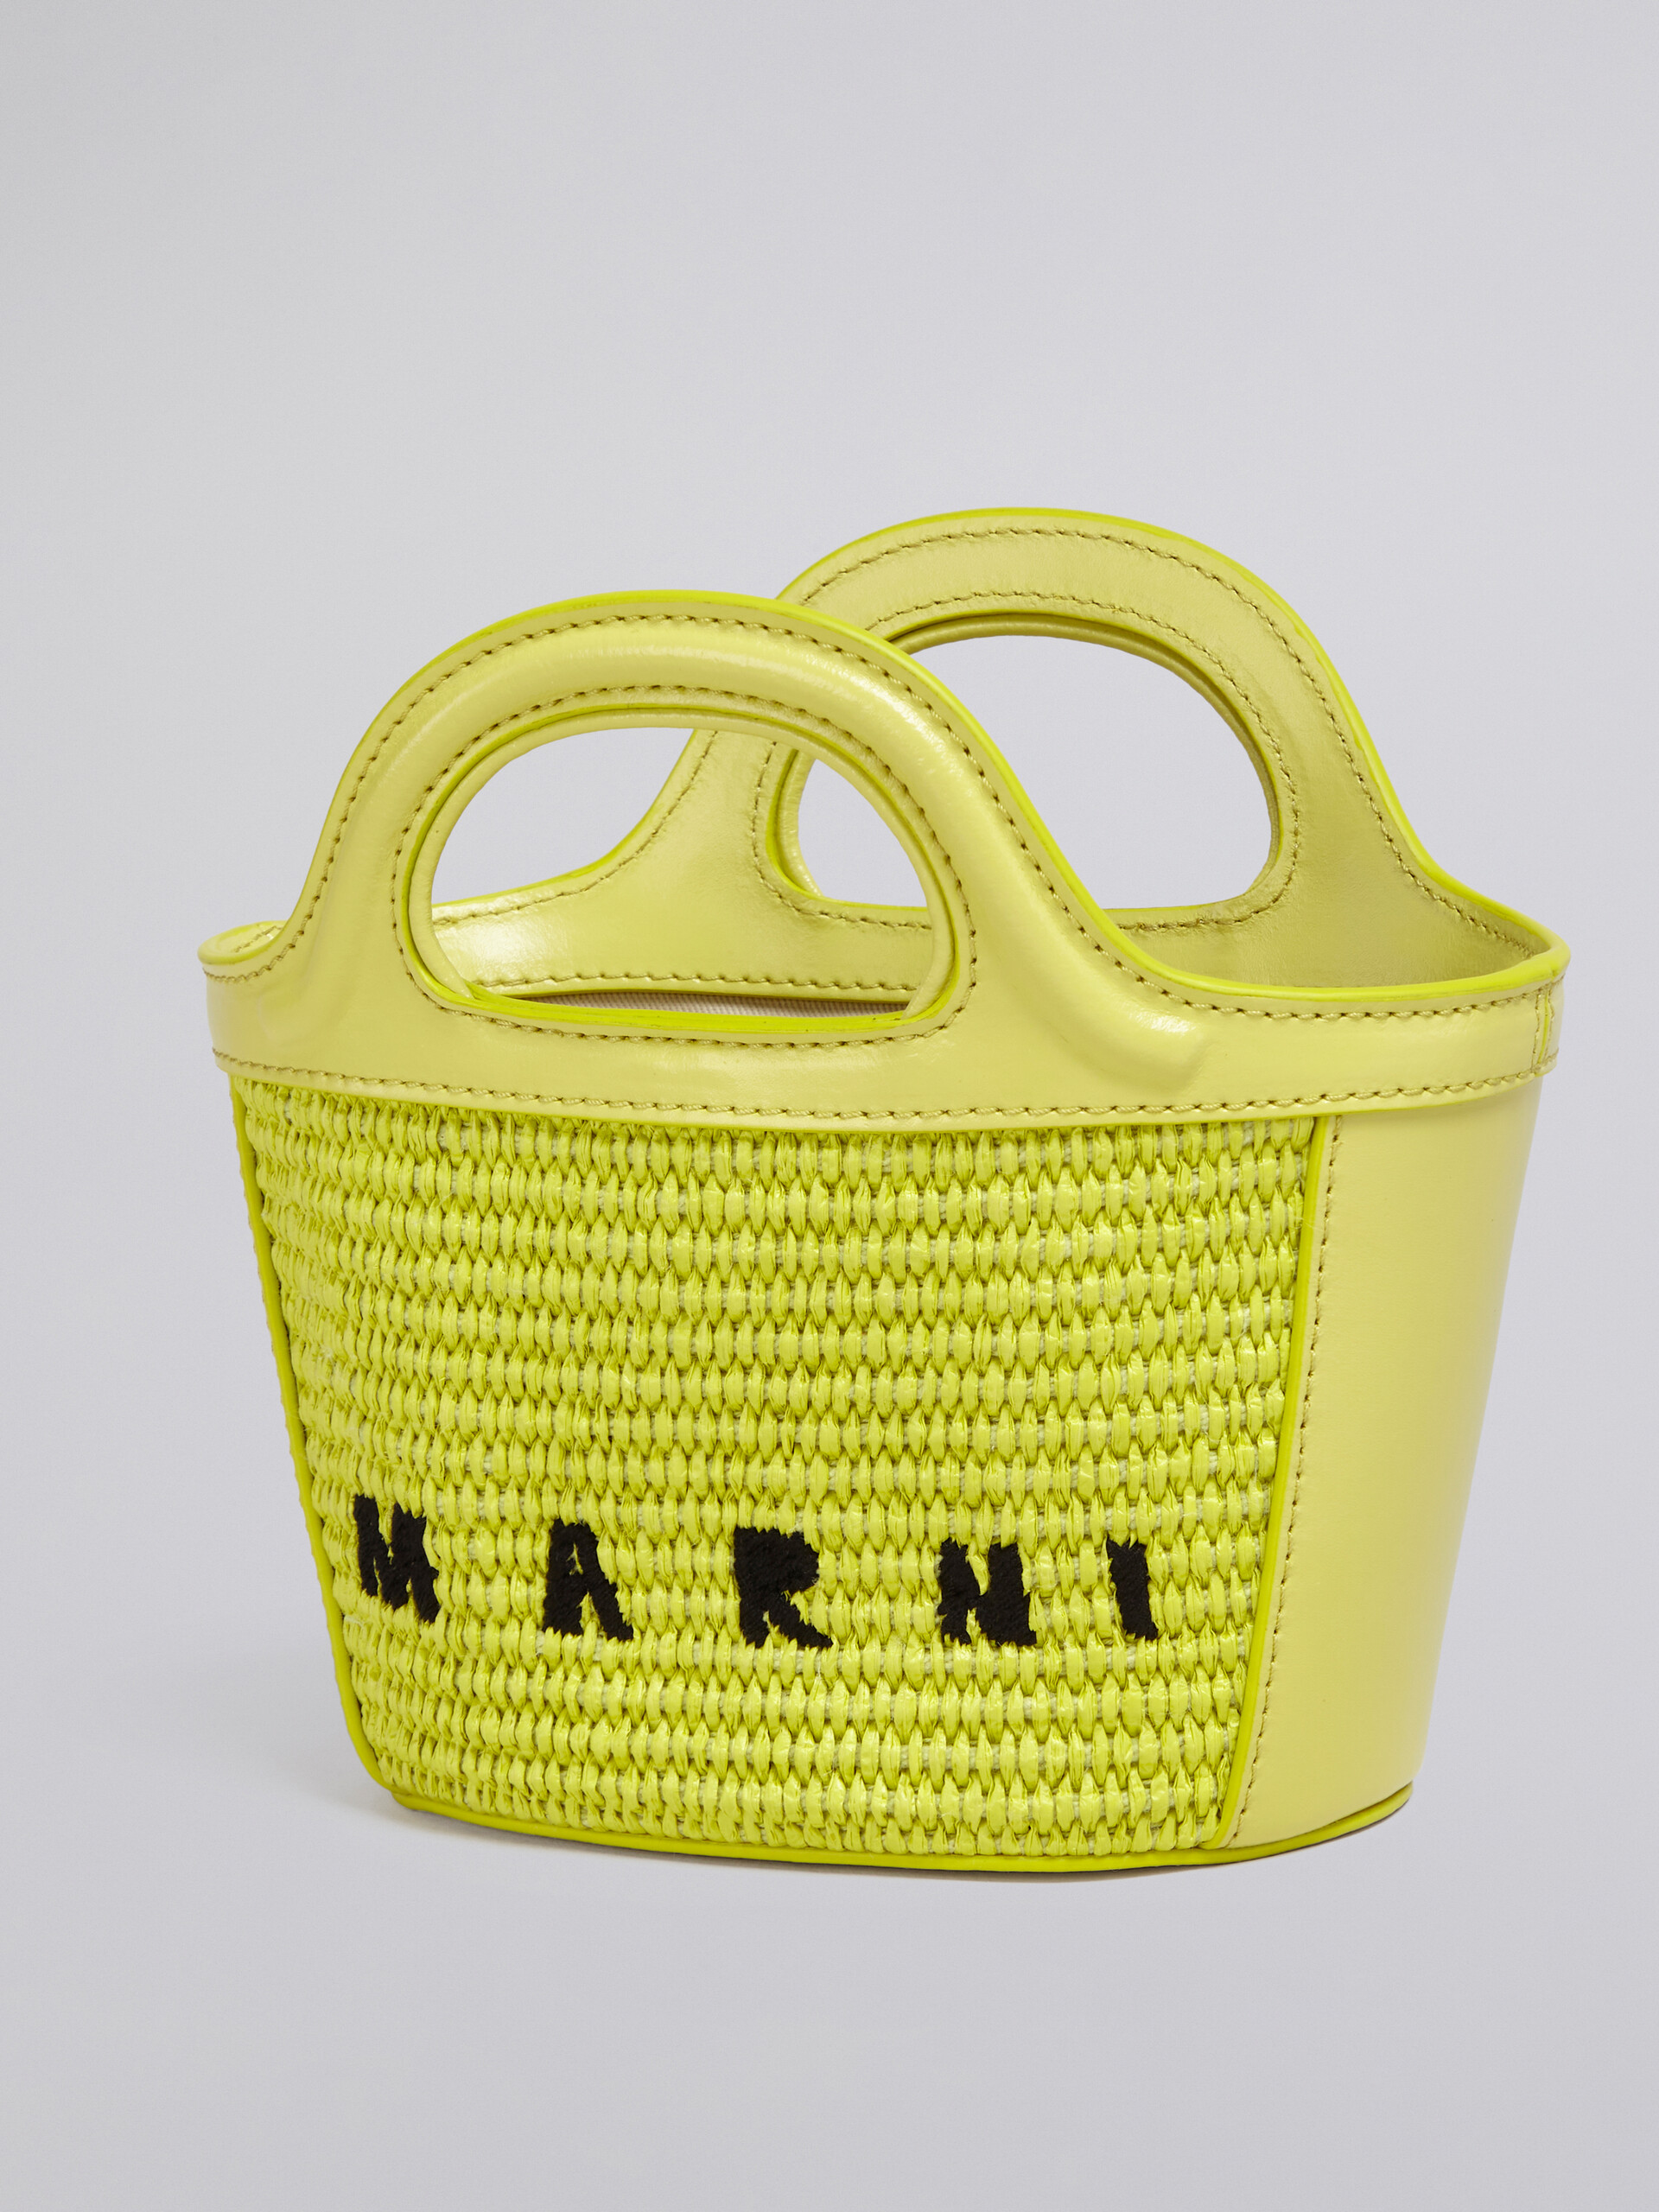 TROPICALIA micro bag in yellow leather and raffia - Handbags - Image 5